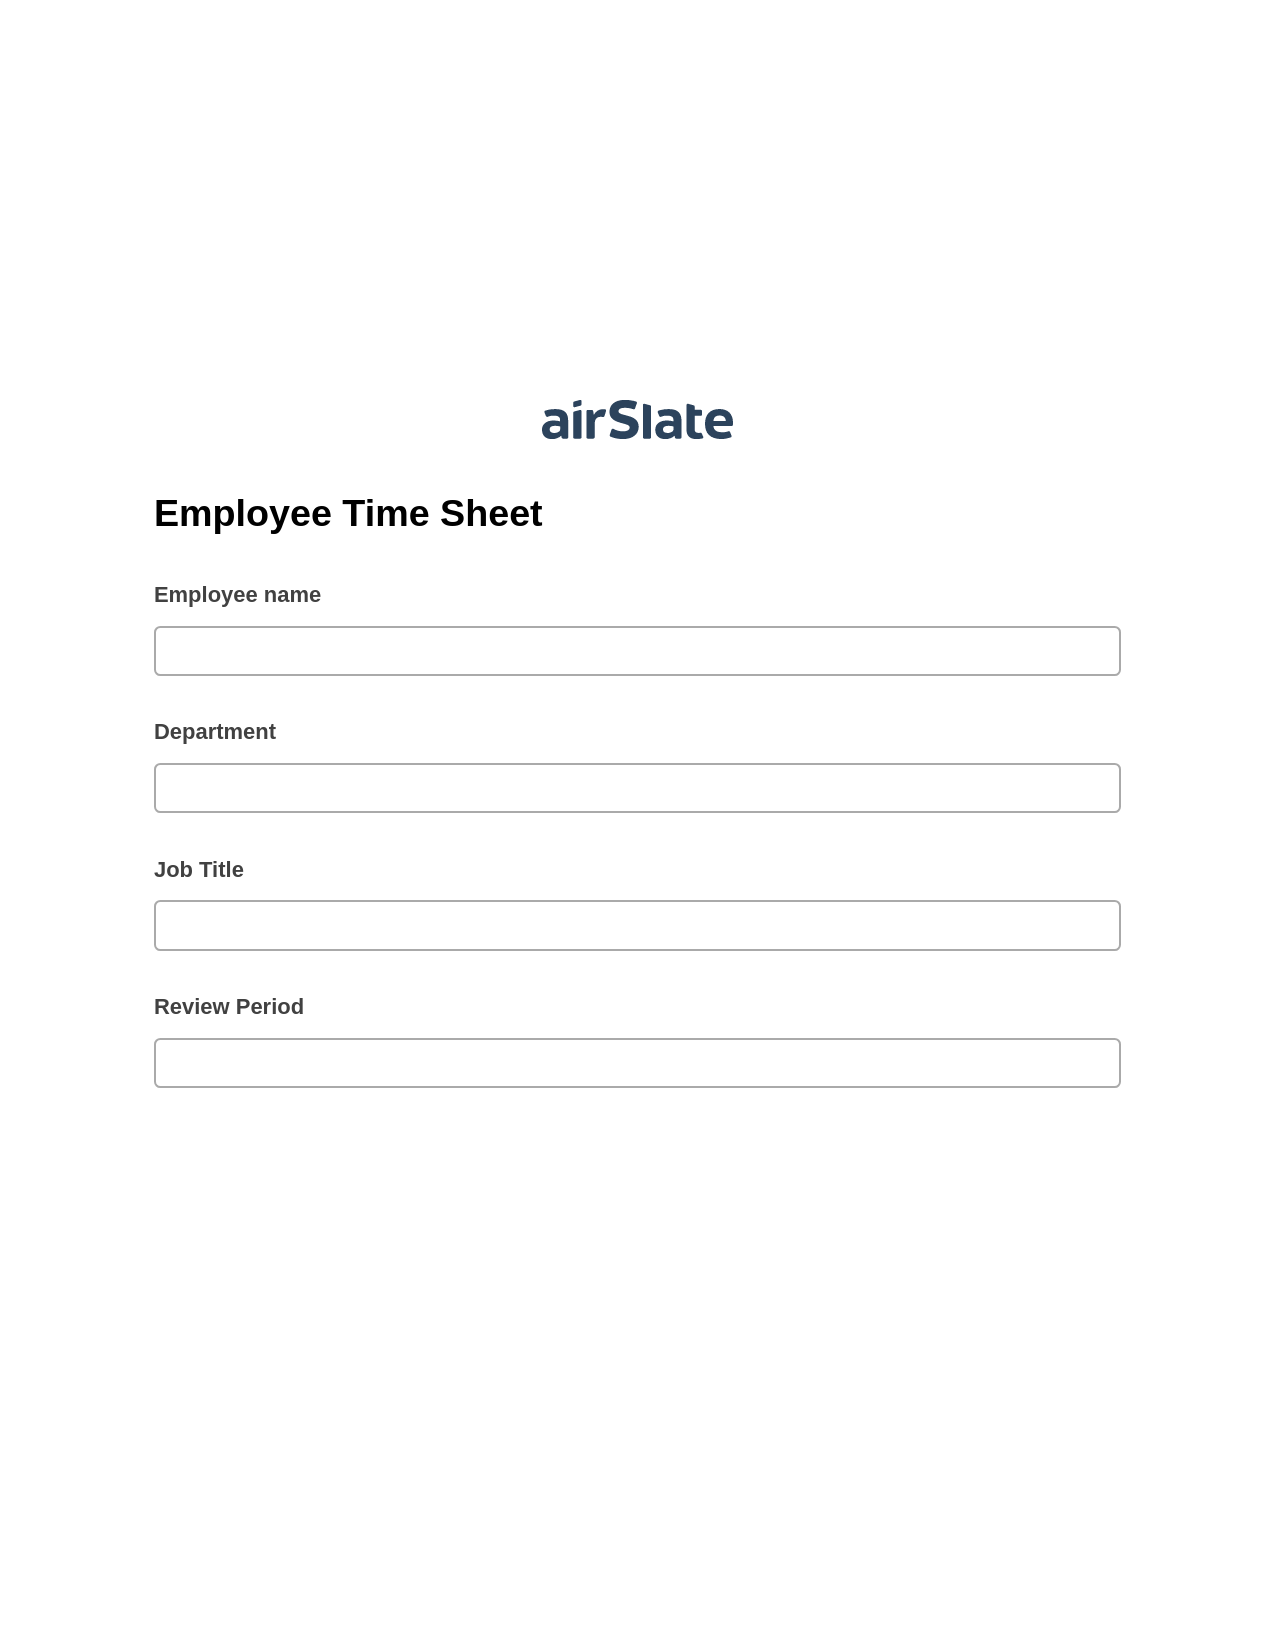 Multirole Employee Time Sheet Pre-fill Dropdowns from Google Sheet Bot, Lock the Slate Bot, Archive to Box Bot